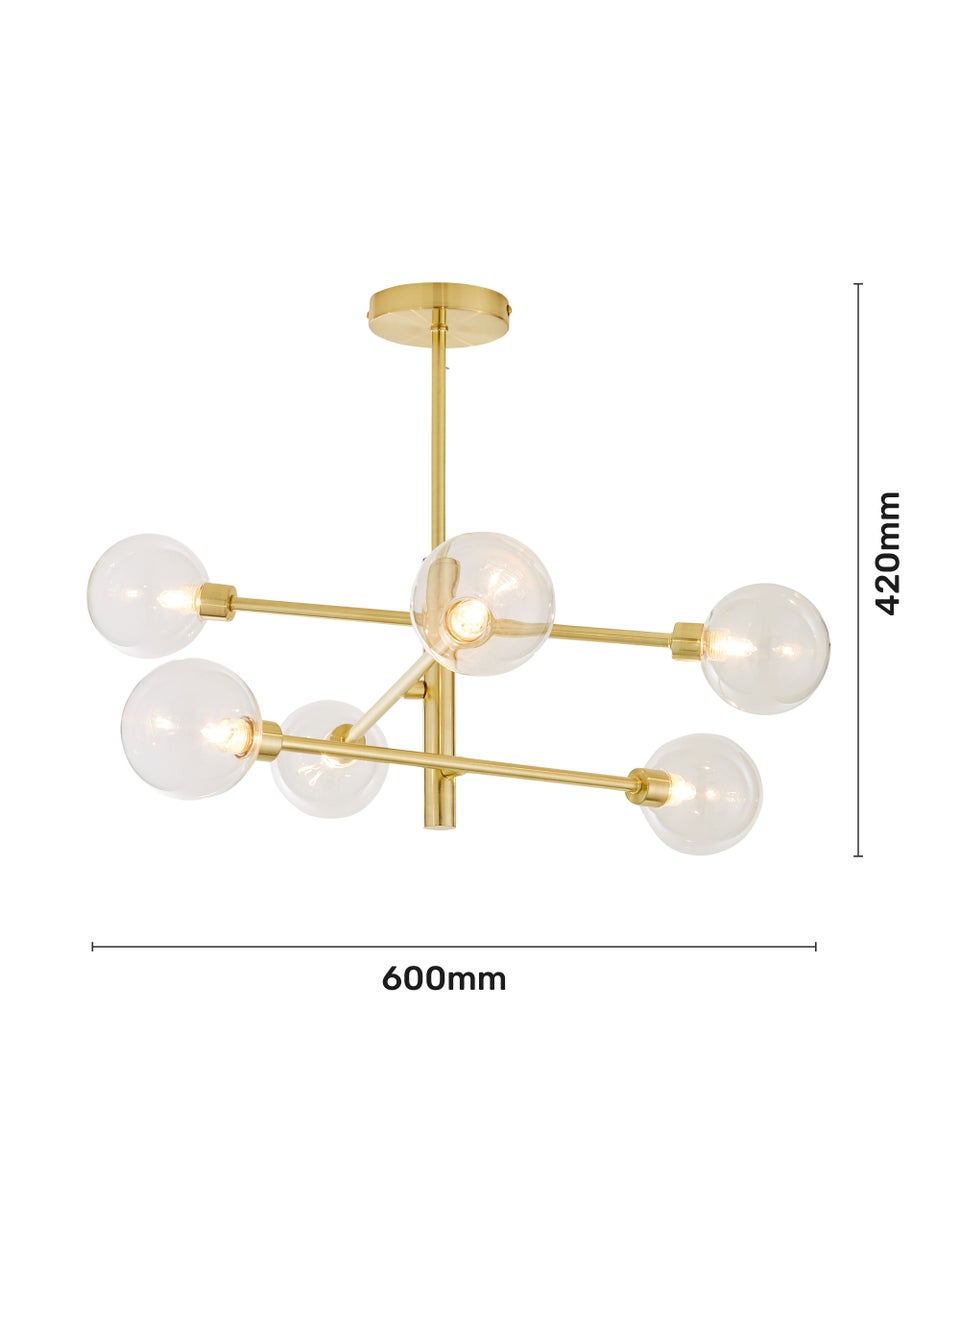 Inlight Nova Semi Flush Ceiling Light Brass (56cm x 60cm x 60cm)